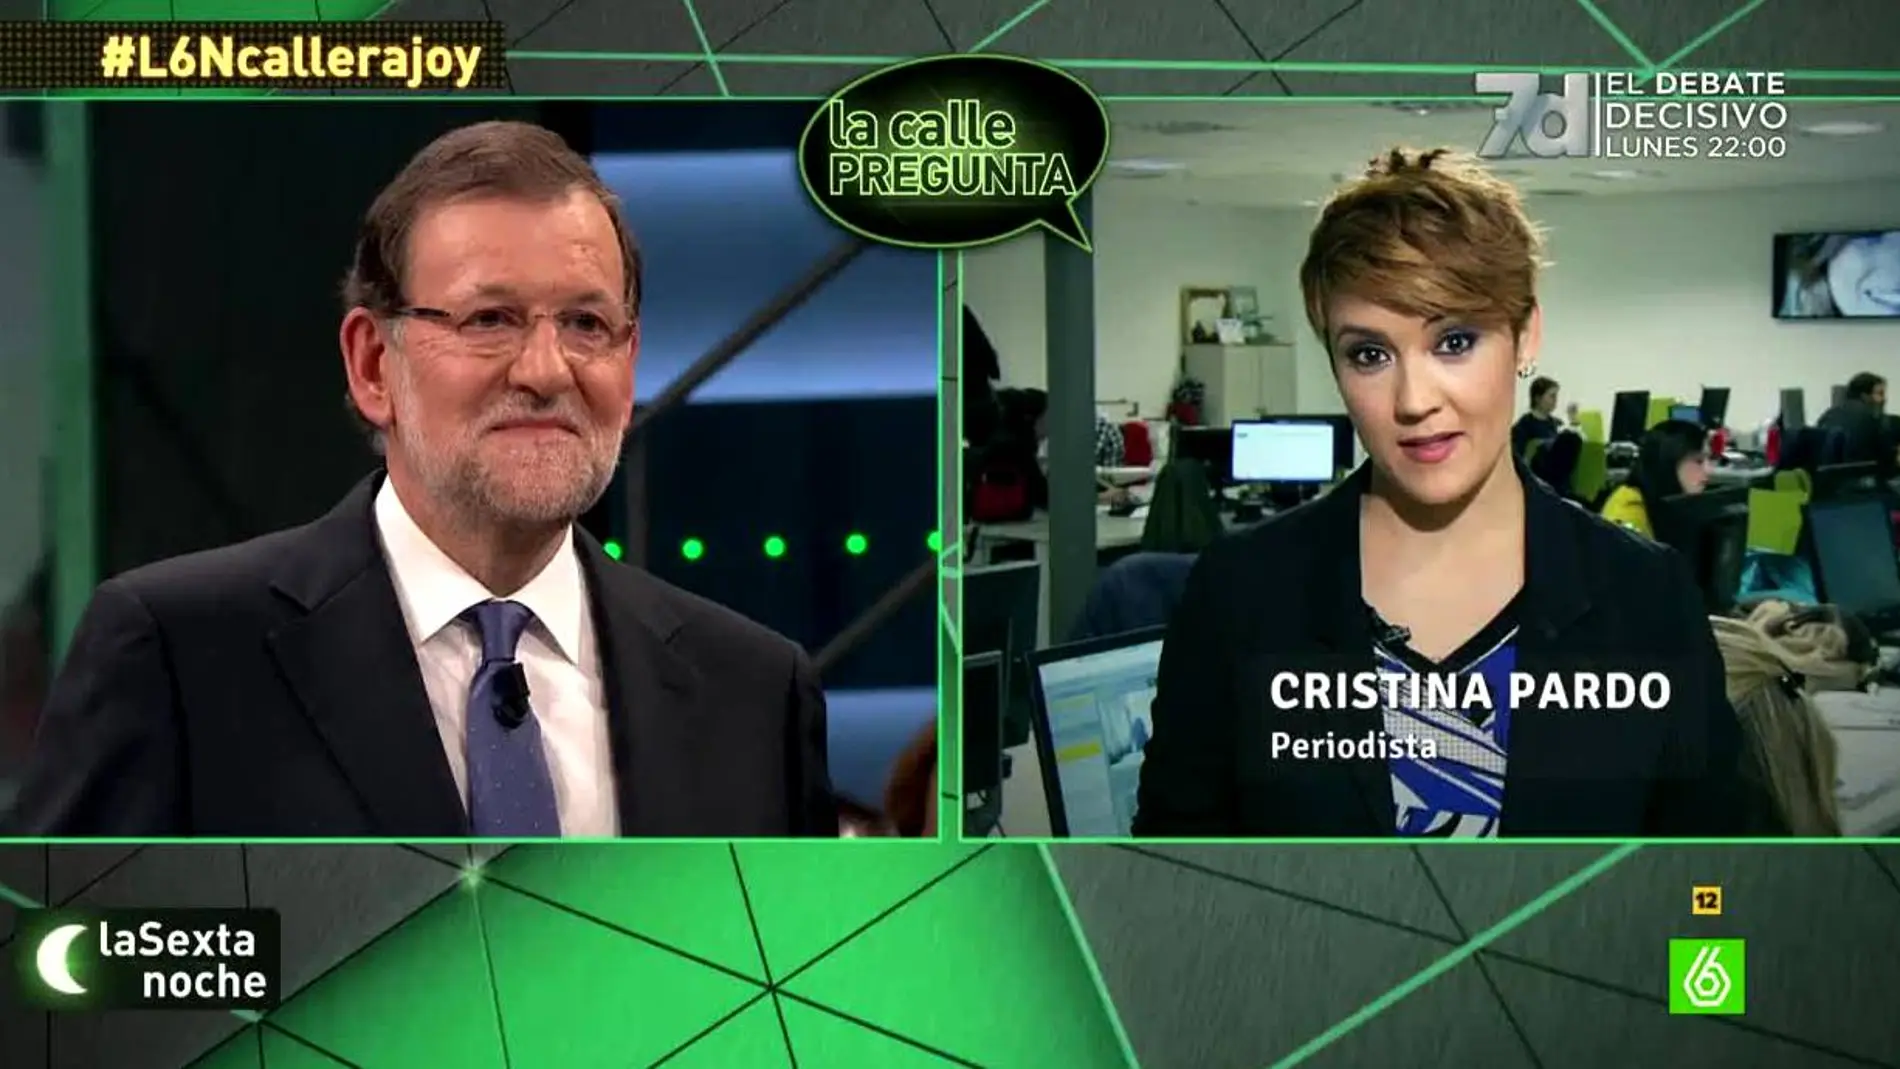 CRistina Pardo pregunta a Rajoy